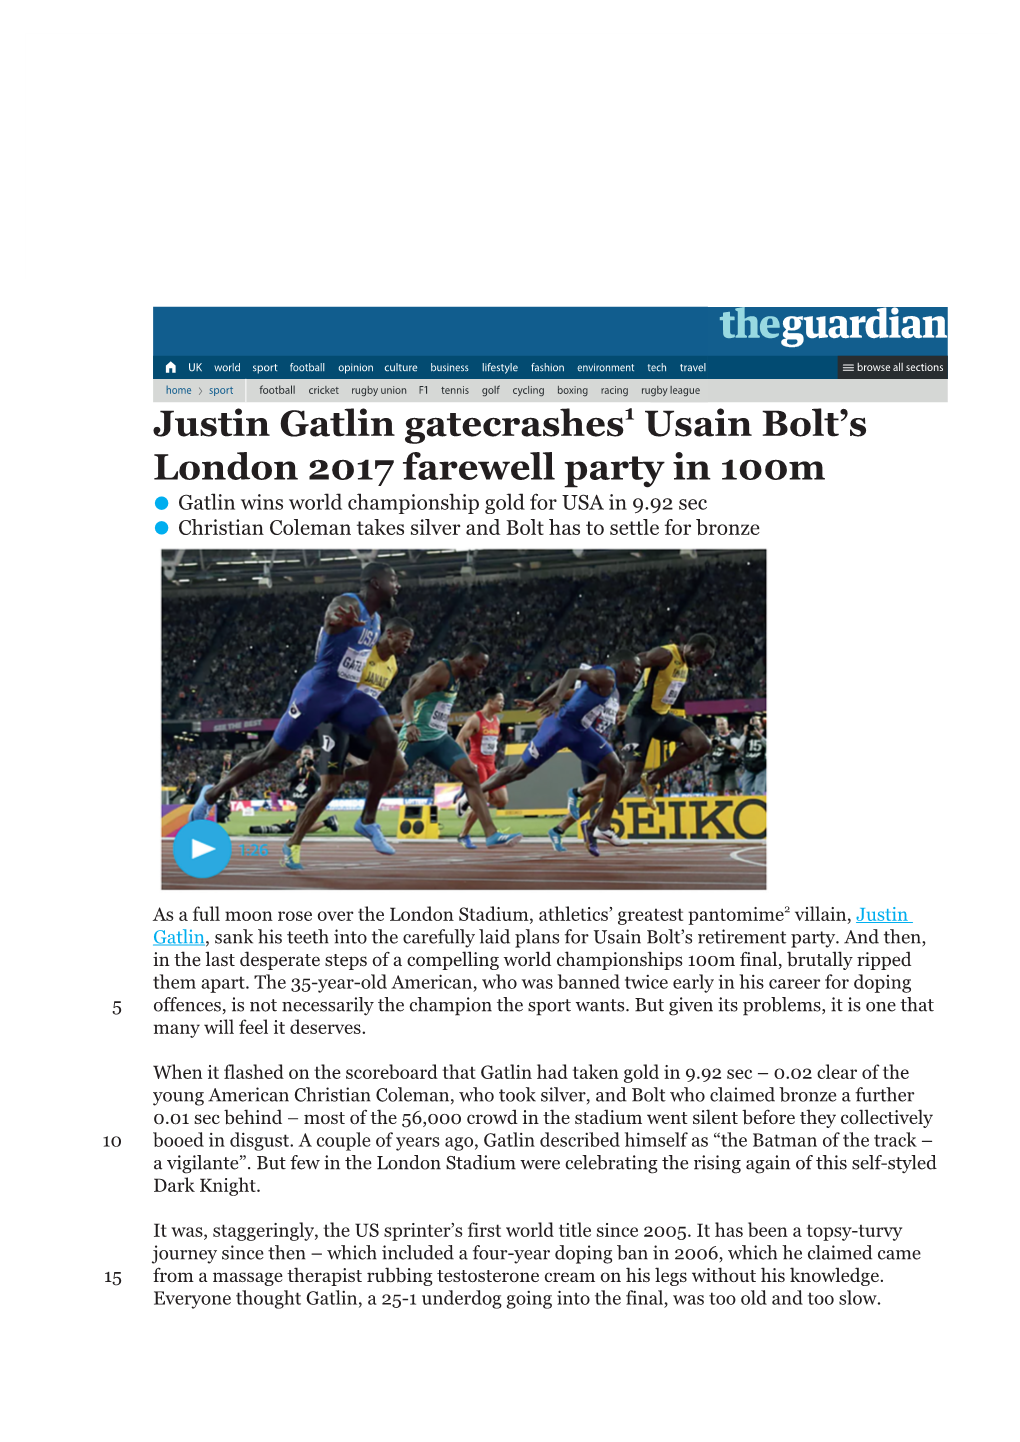 Justin Gatlin Gatecrashes1 Usain Bolt's London 2017 Farewell Party In